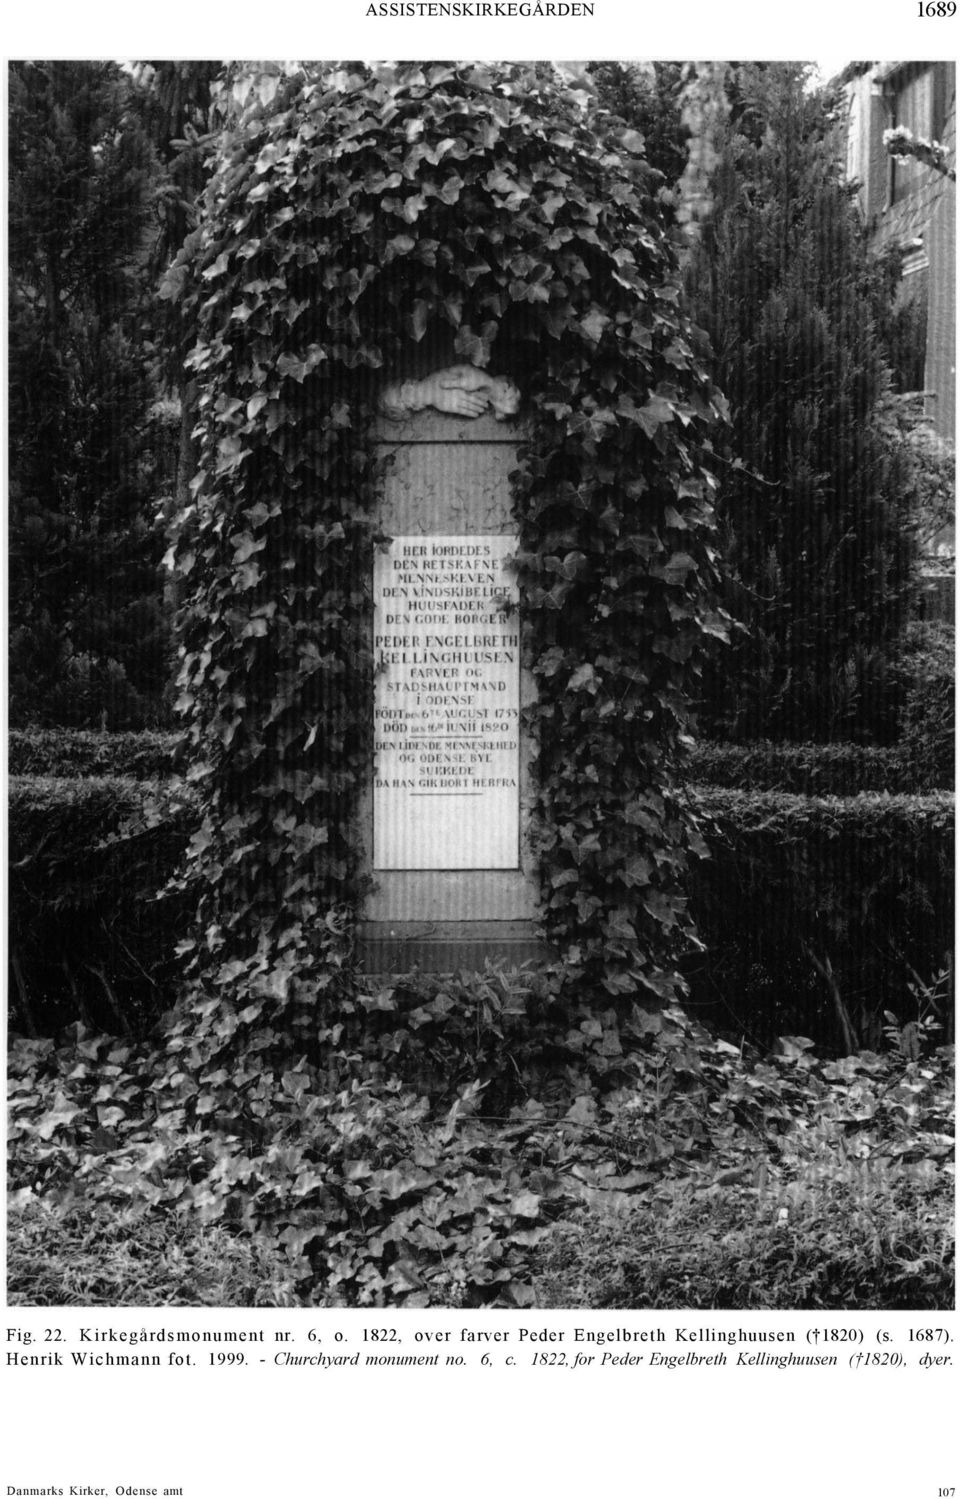 Henrik Wichmann fot. 1999. - Churchyard monument no. 6, c.